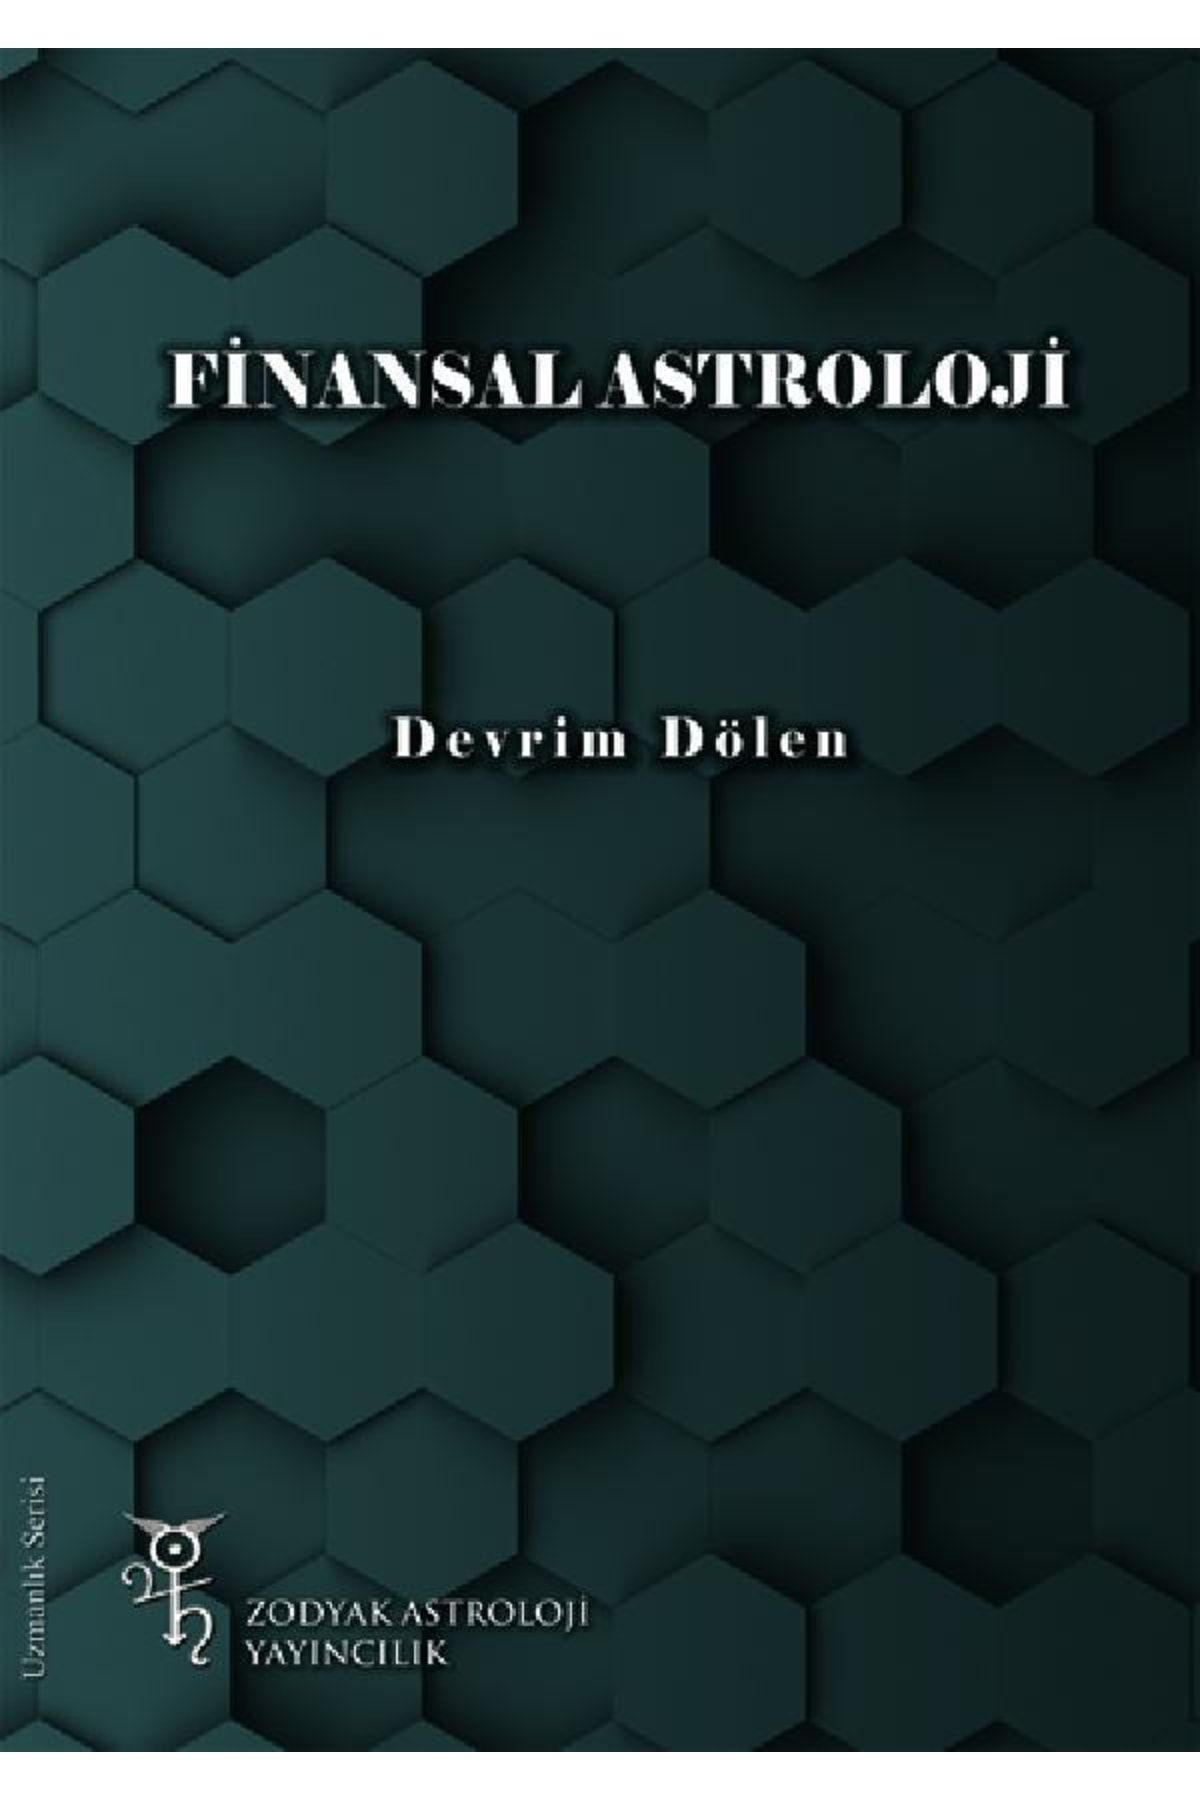 ZODYAK ASTROLOJİ YAYINCILIK Finansal Astroloji